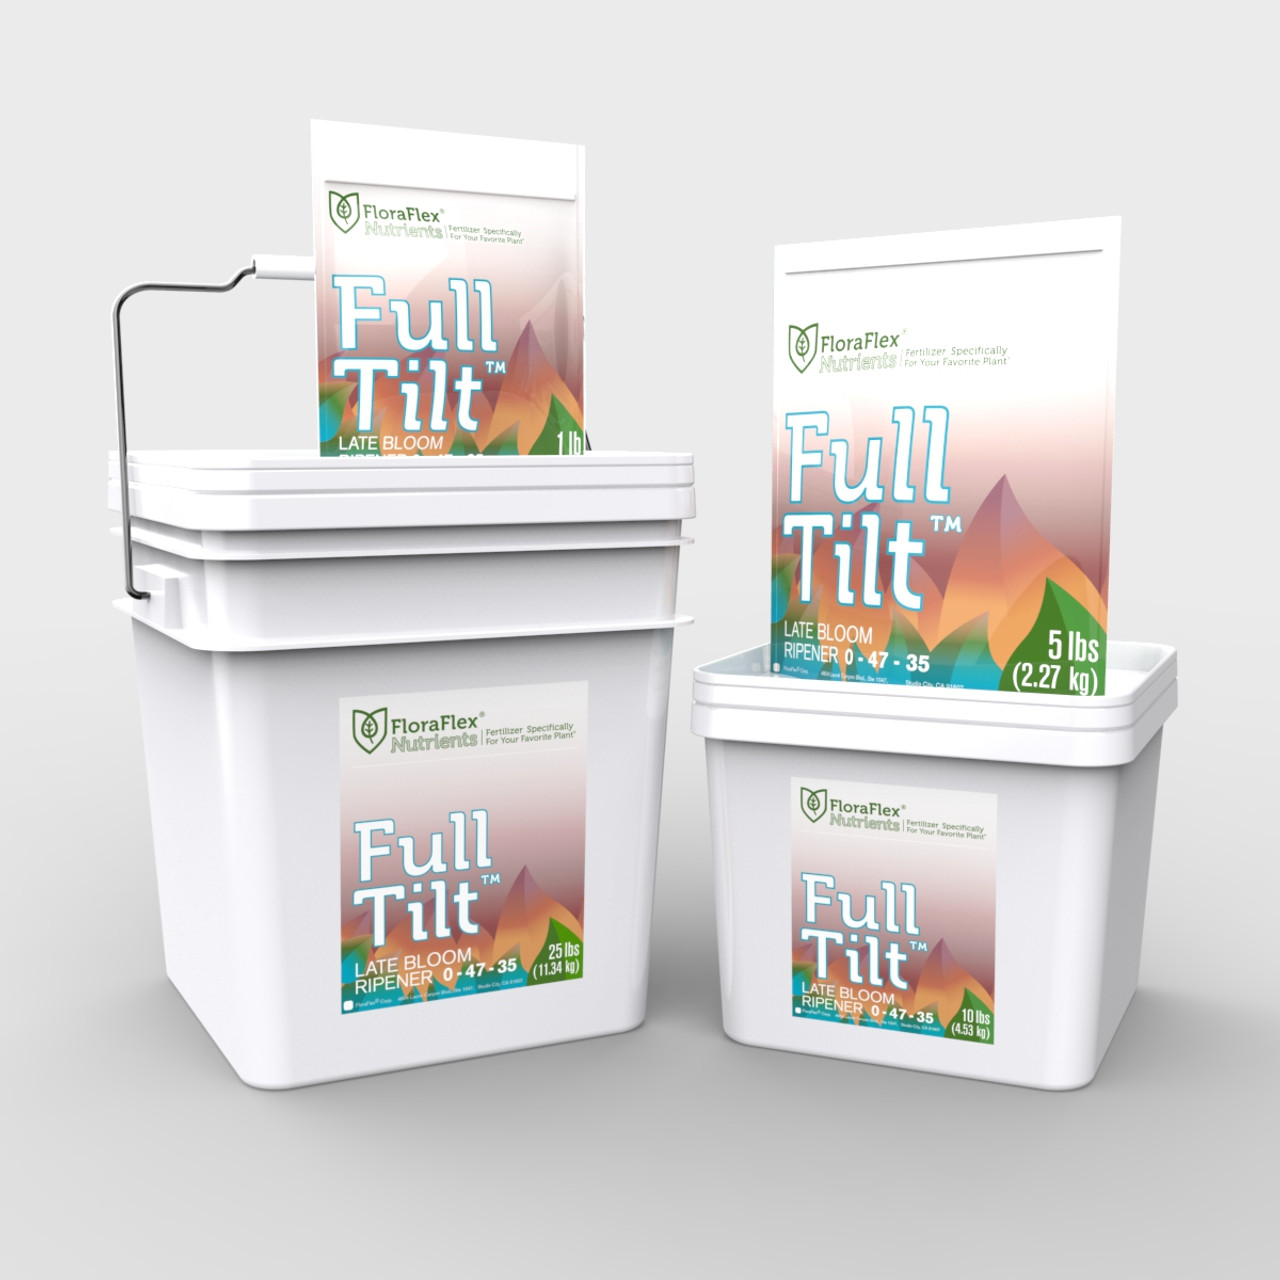 FloraFlex Nutrients Full Tilt - 25 lb 